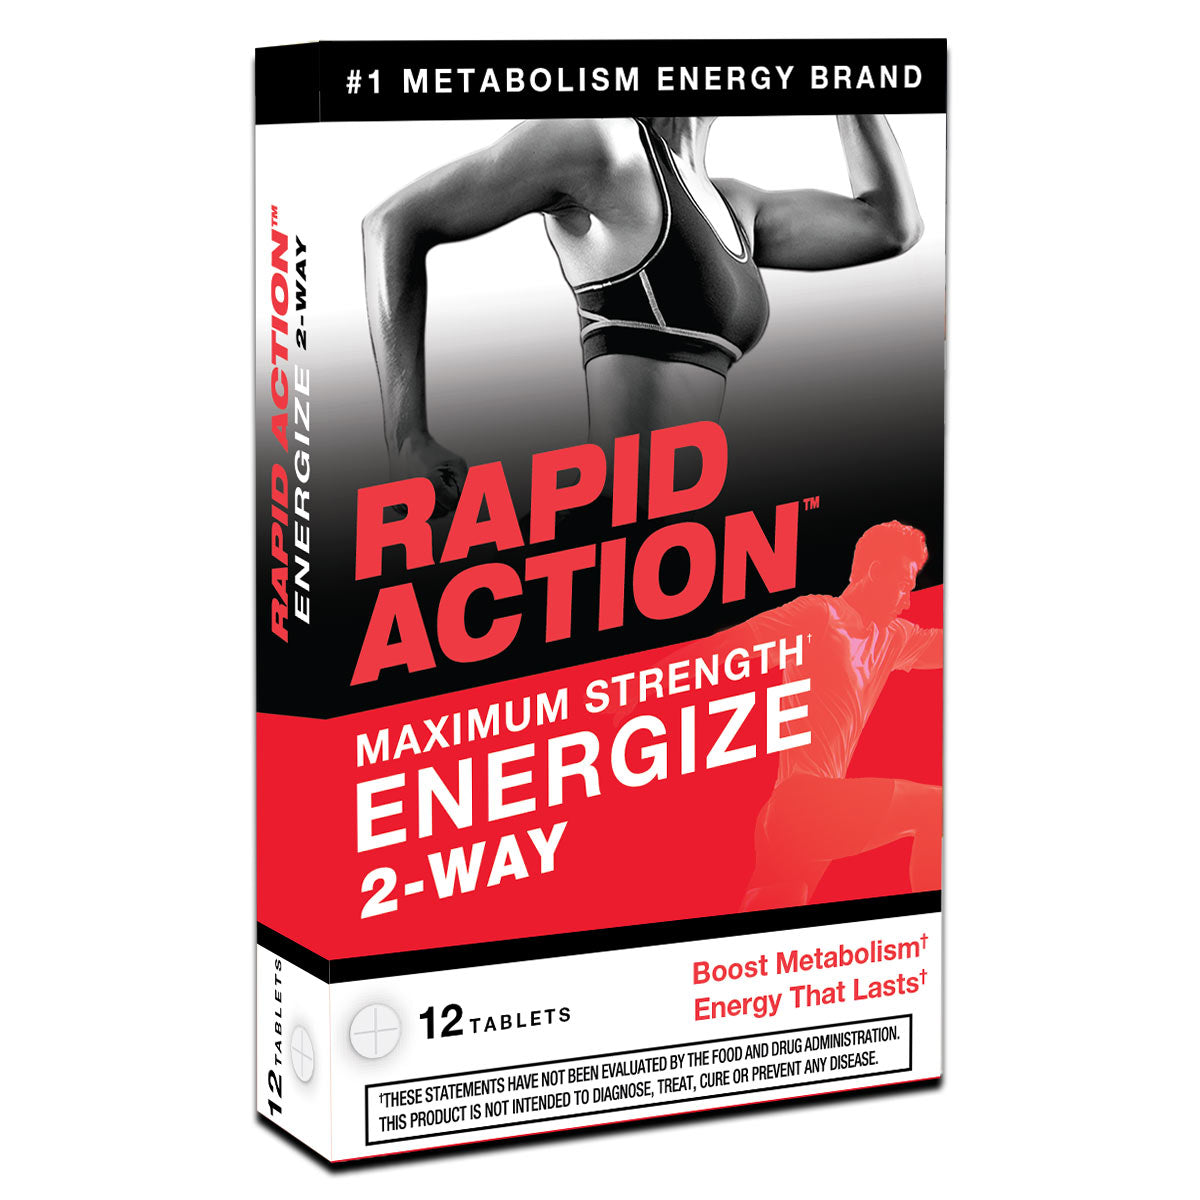 Rapid Action ENERGIZE 2-Way Energy Pills Maximum Strength - Boost Metabolism (12 Tabs)